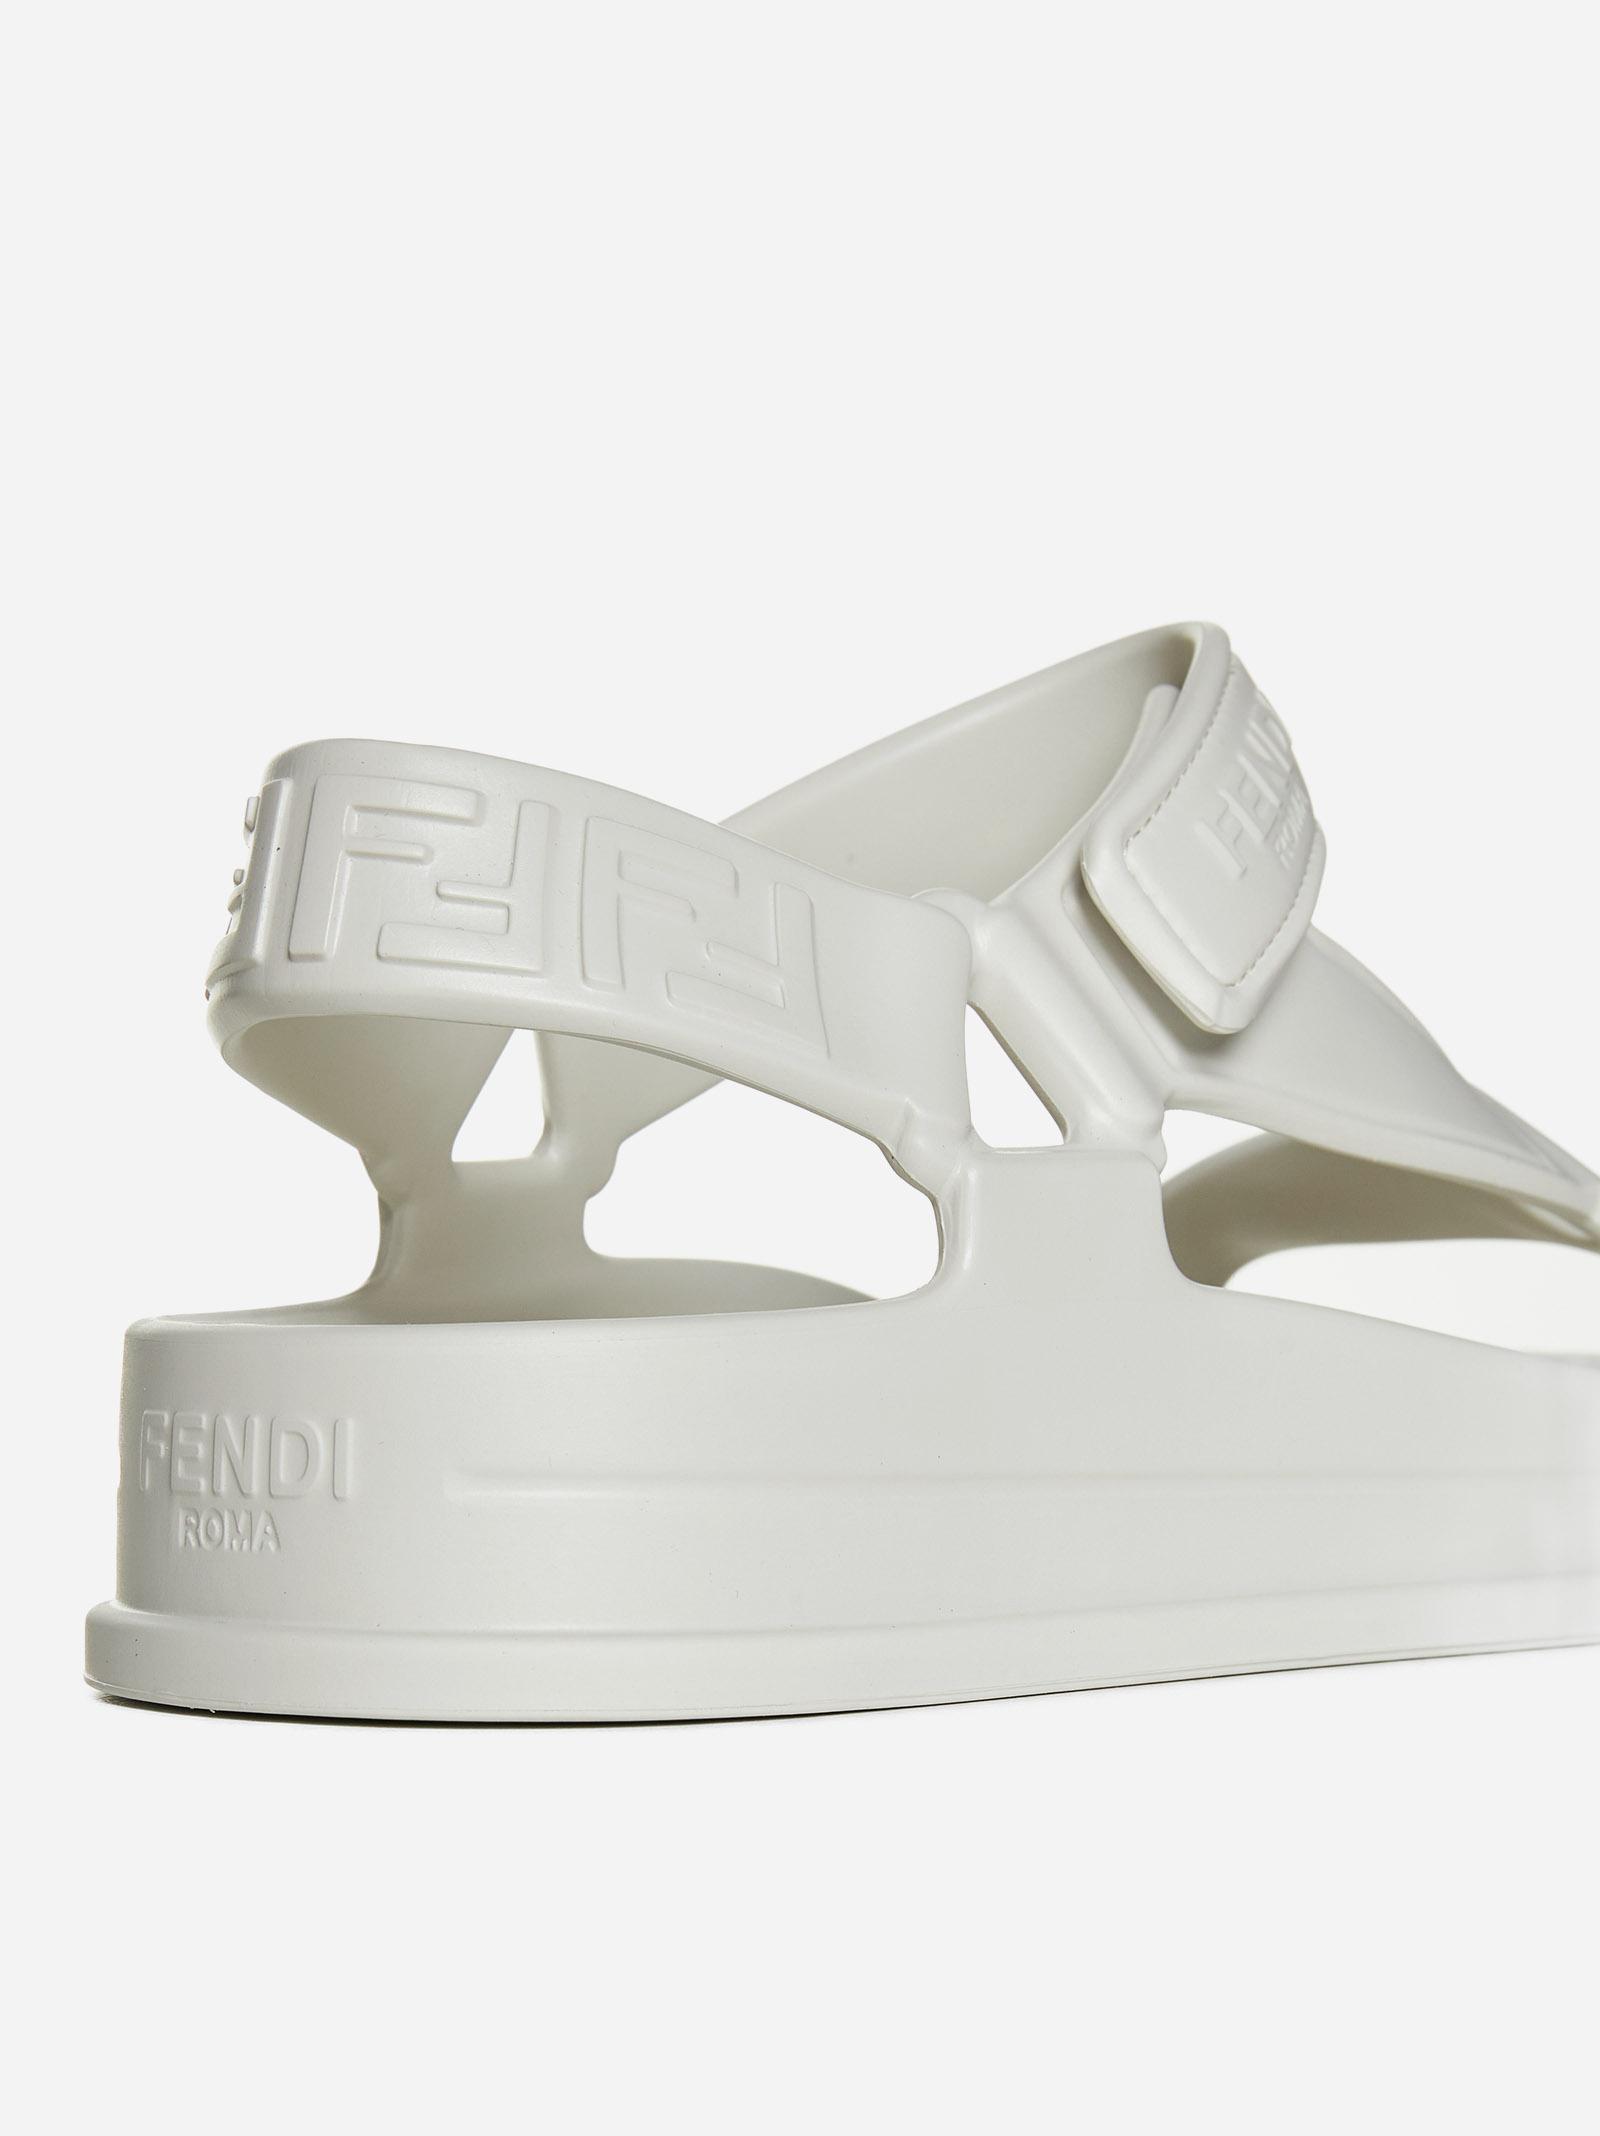 Fendi Ff Logo Rubber Sandals in White | Lyst